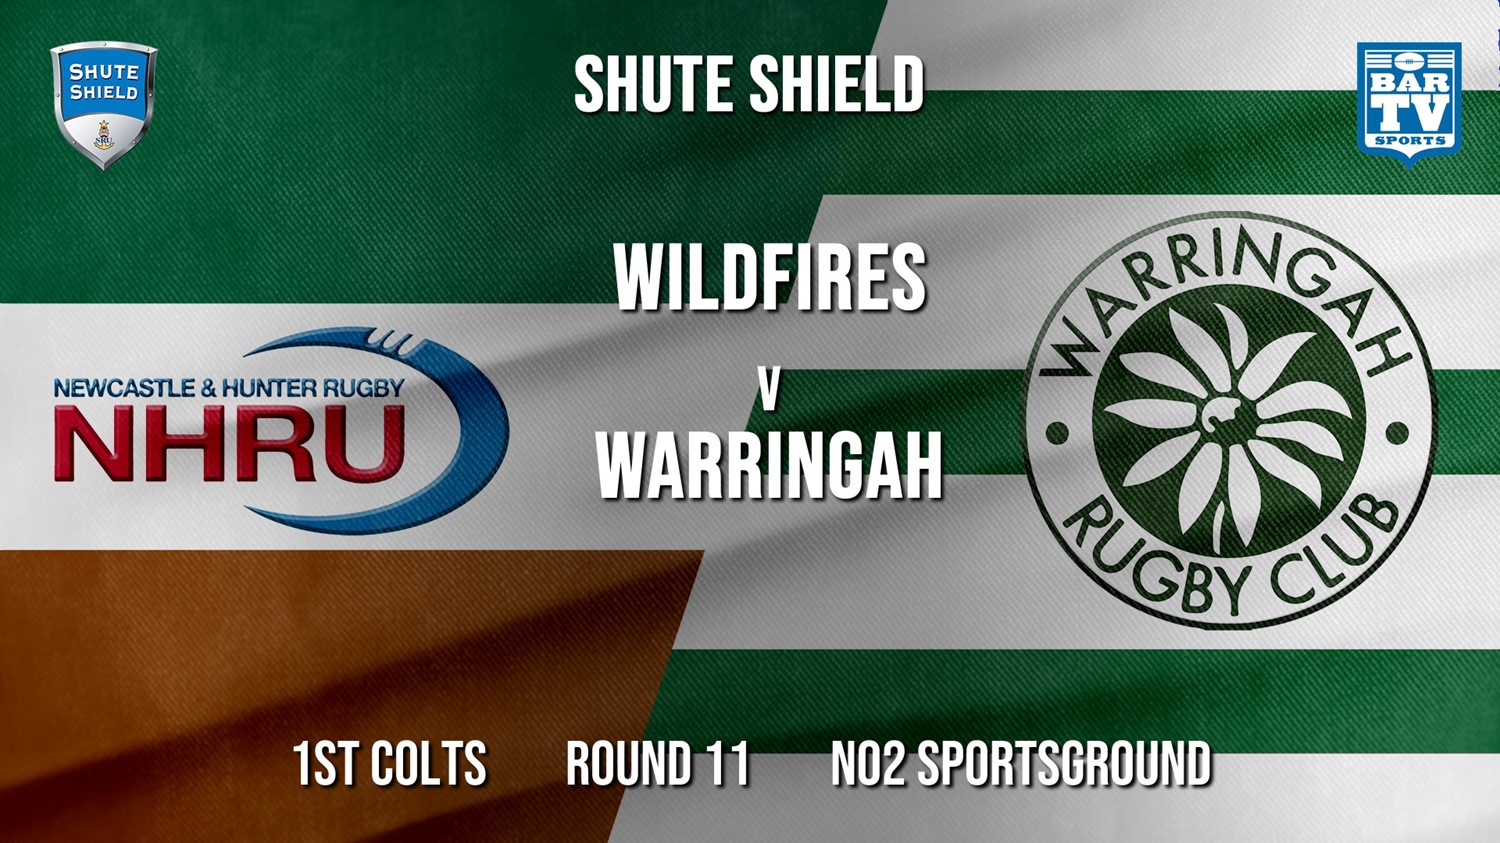 Shute Shield Round 11 - 1st Colts - NHRU Wildfires v Warringah Minigame Slate Image